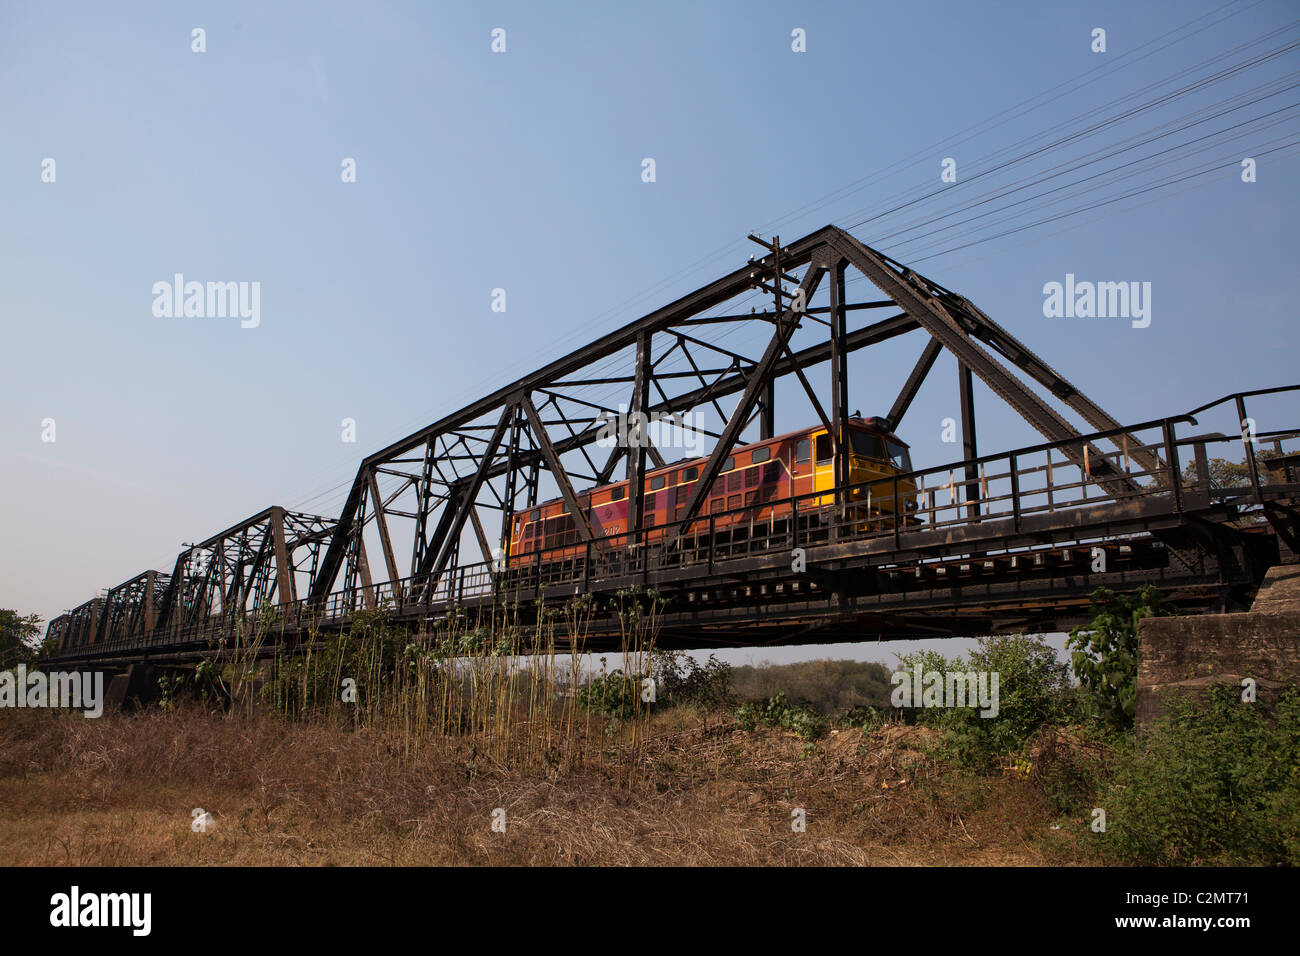 The Lampang railroad bridge cross the Wang river in Lampang, Thailand Stock Photo